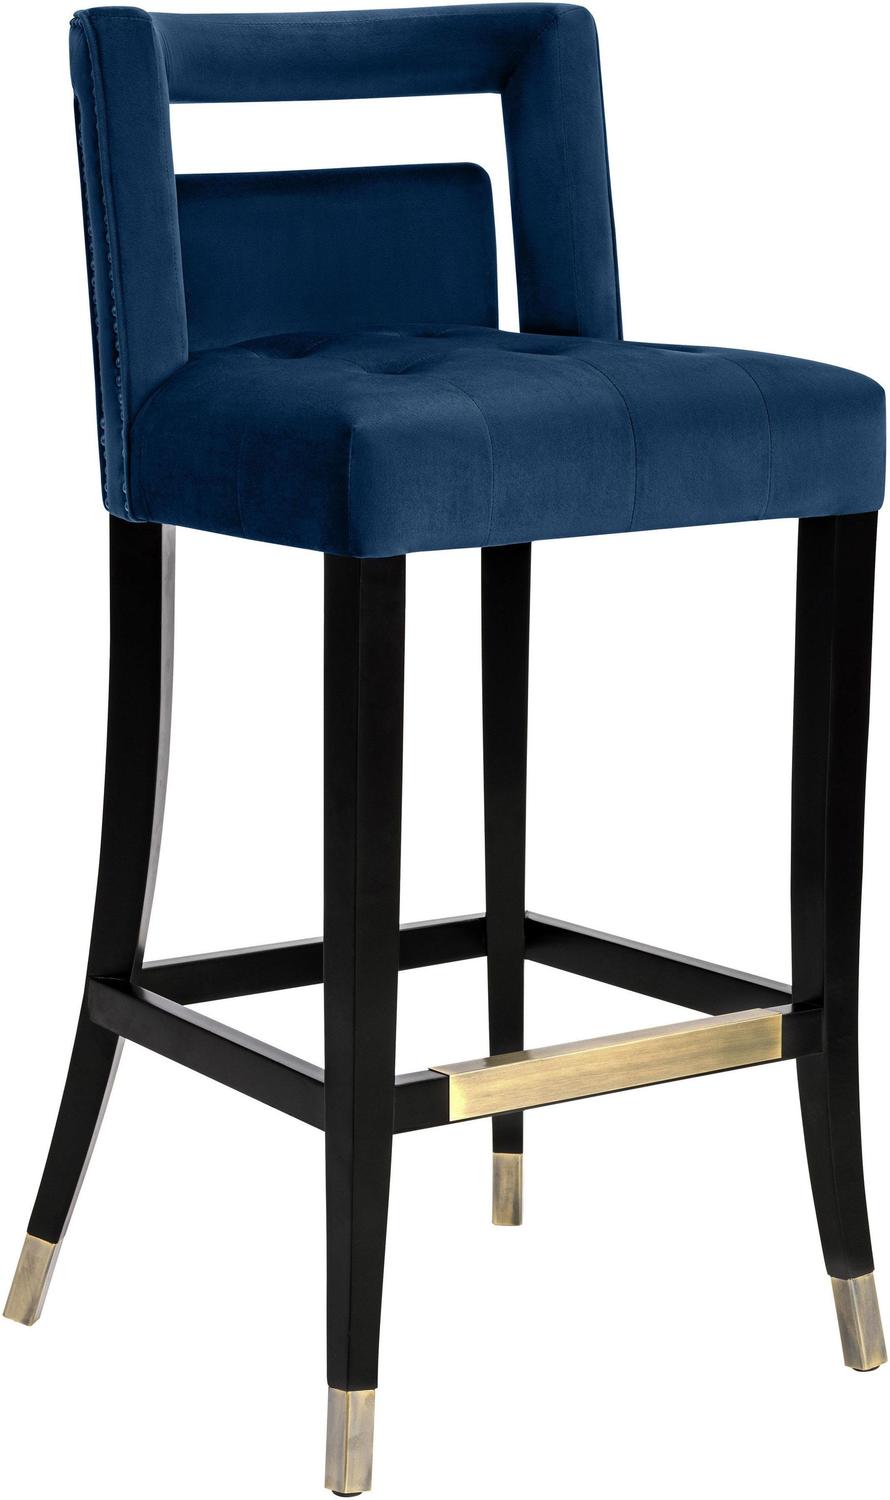 high bar stools near me Tov Furniture Stools Navy